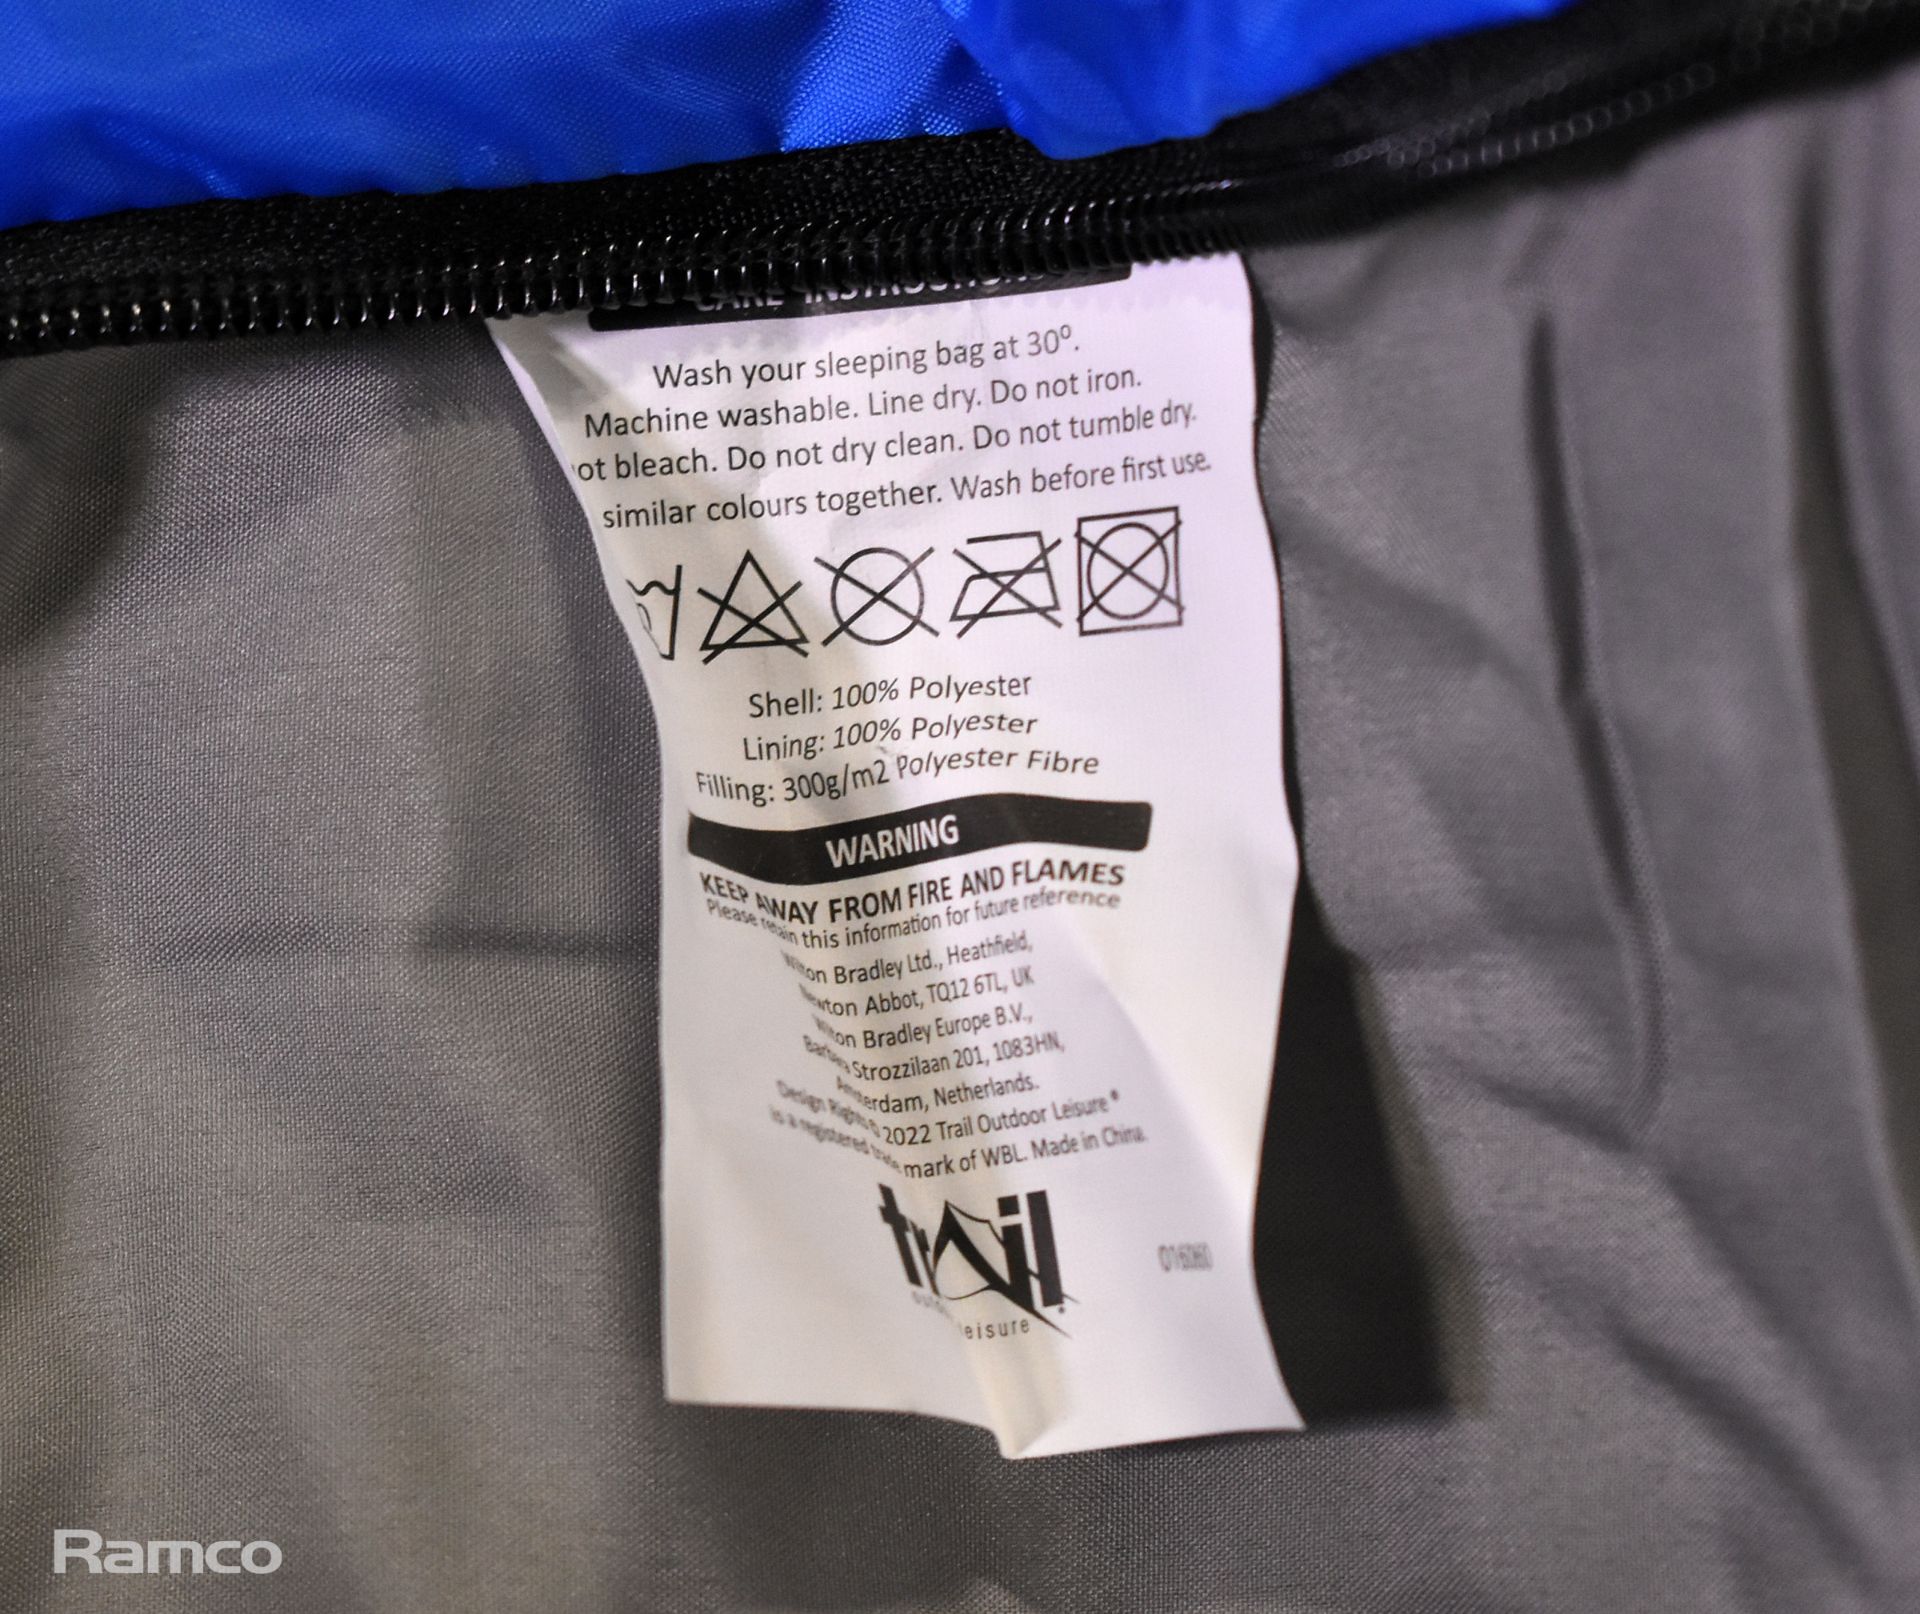 Overnight adventure outdoor sleeping bag in a rucksack - Image 6 of 6